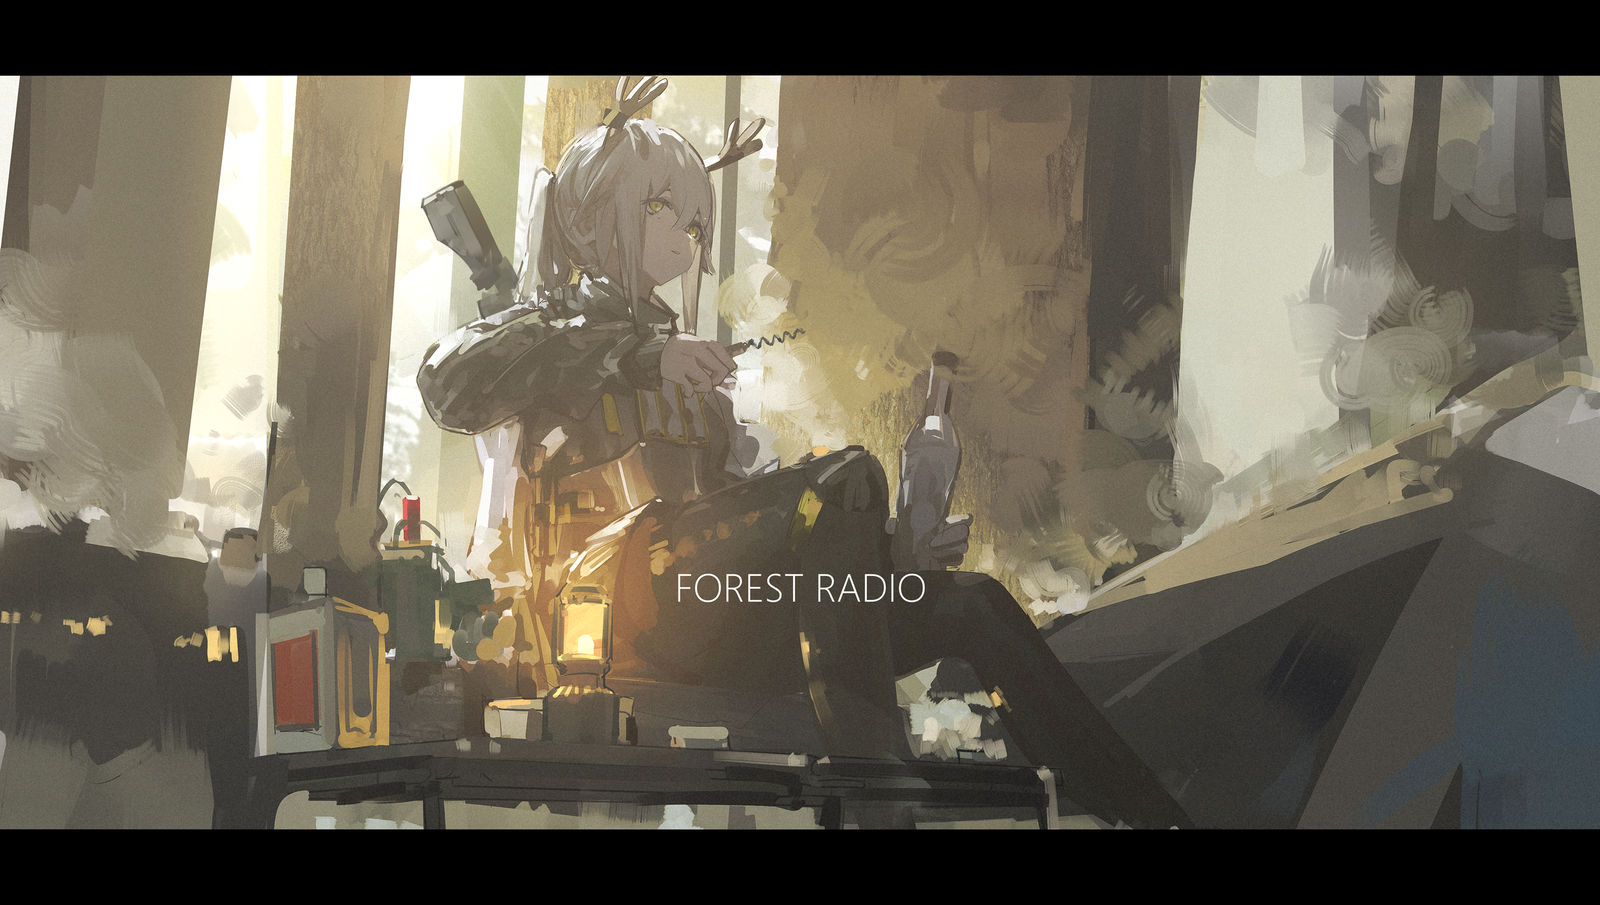 Forest radio